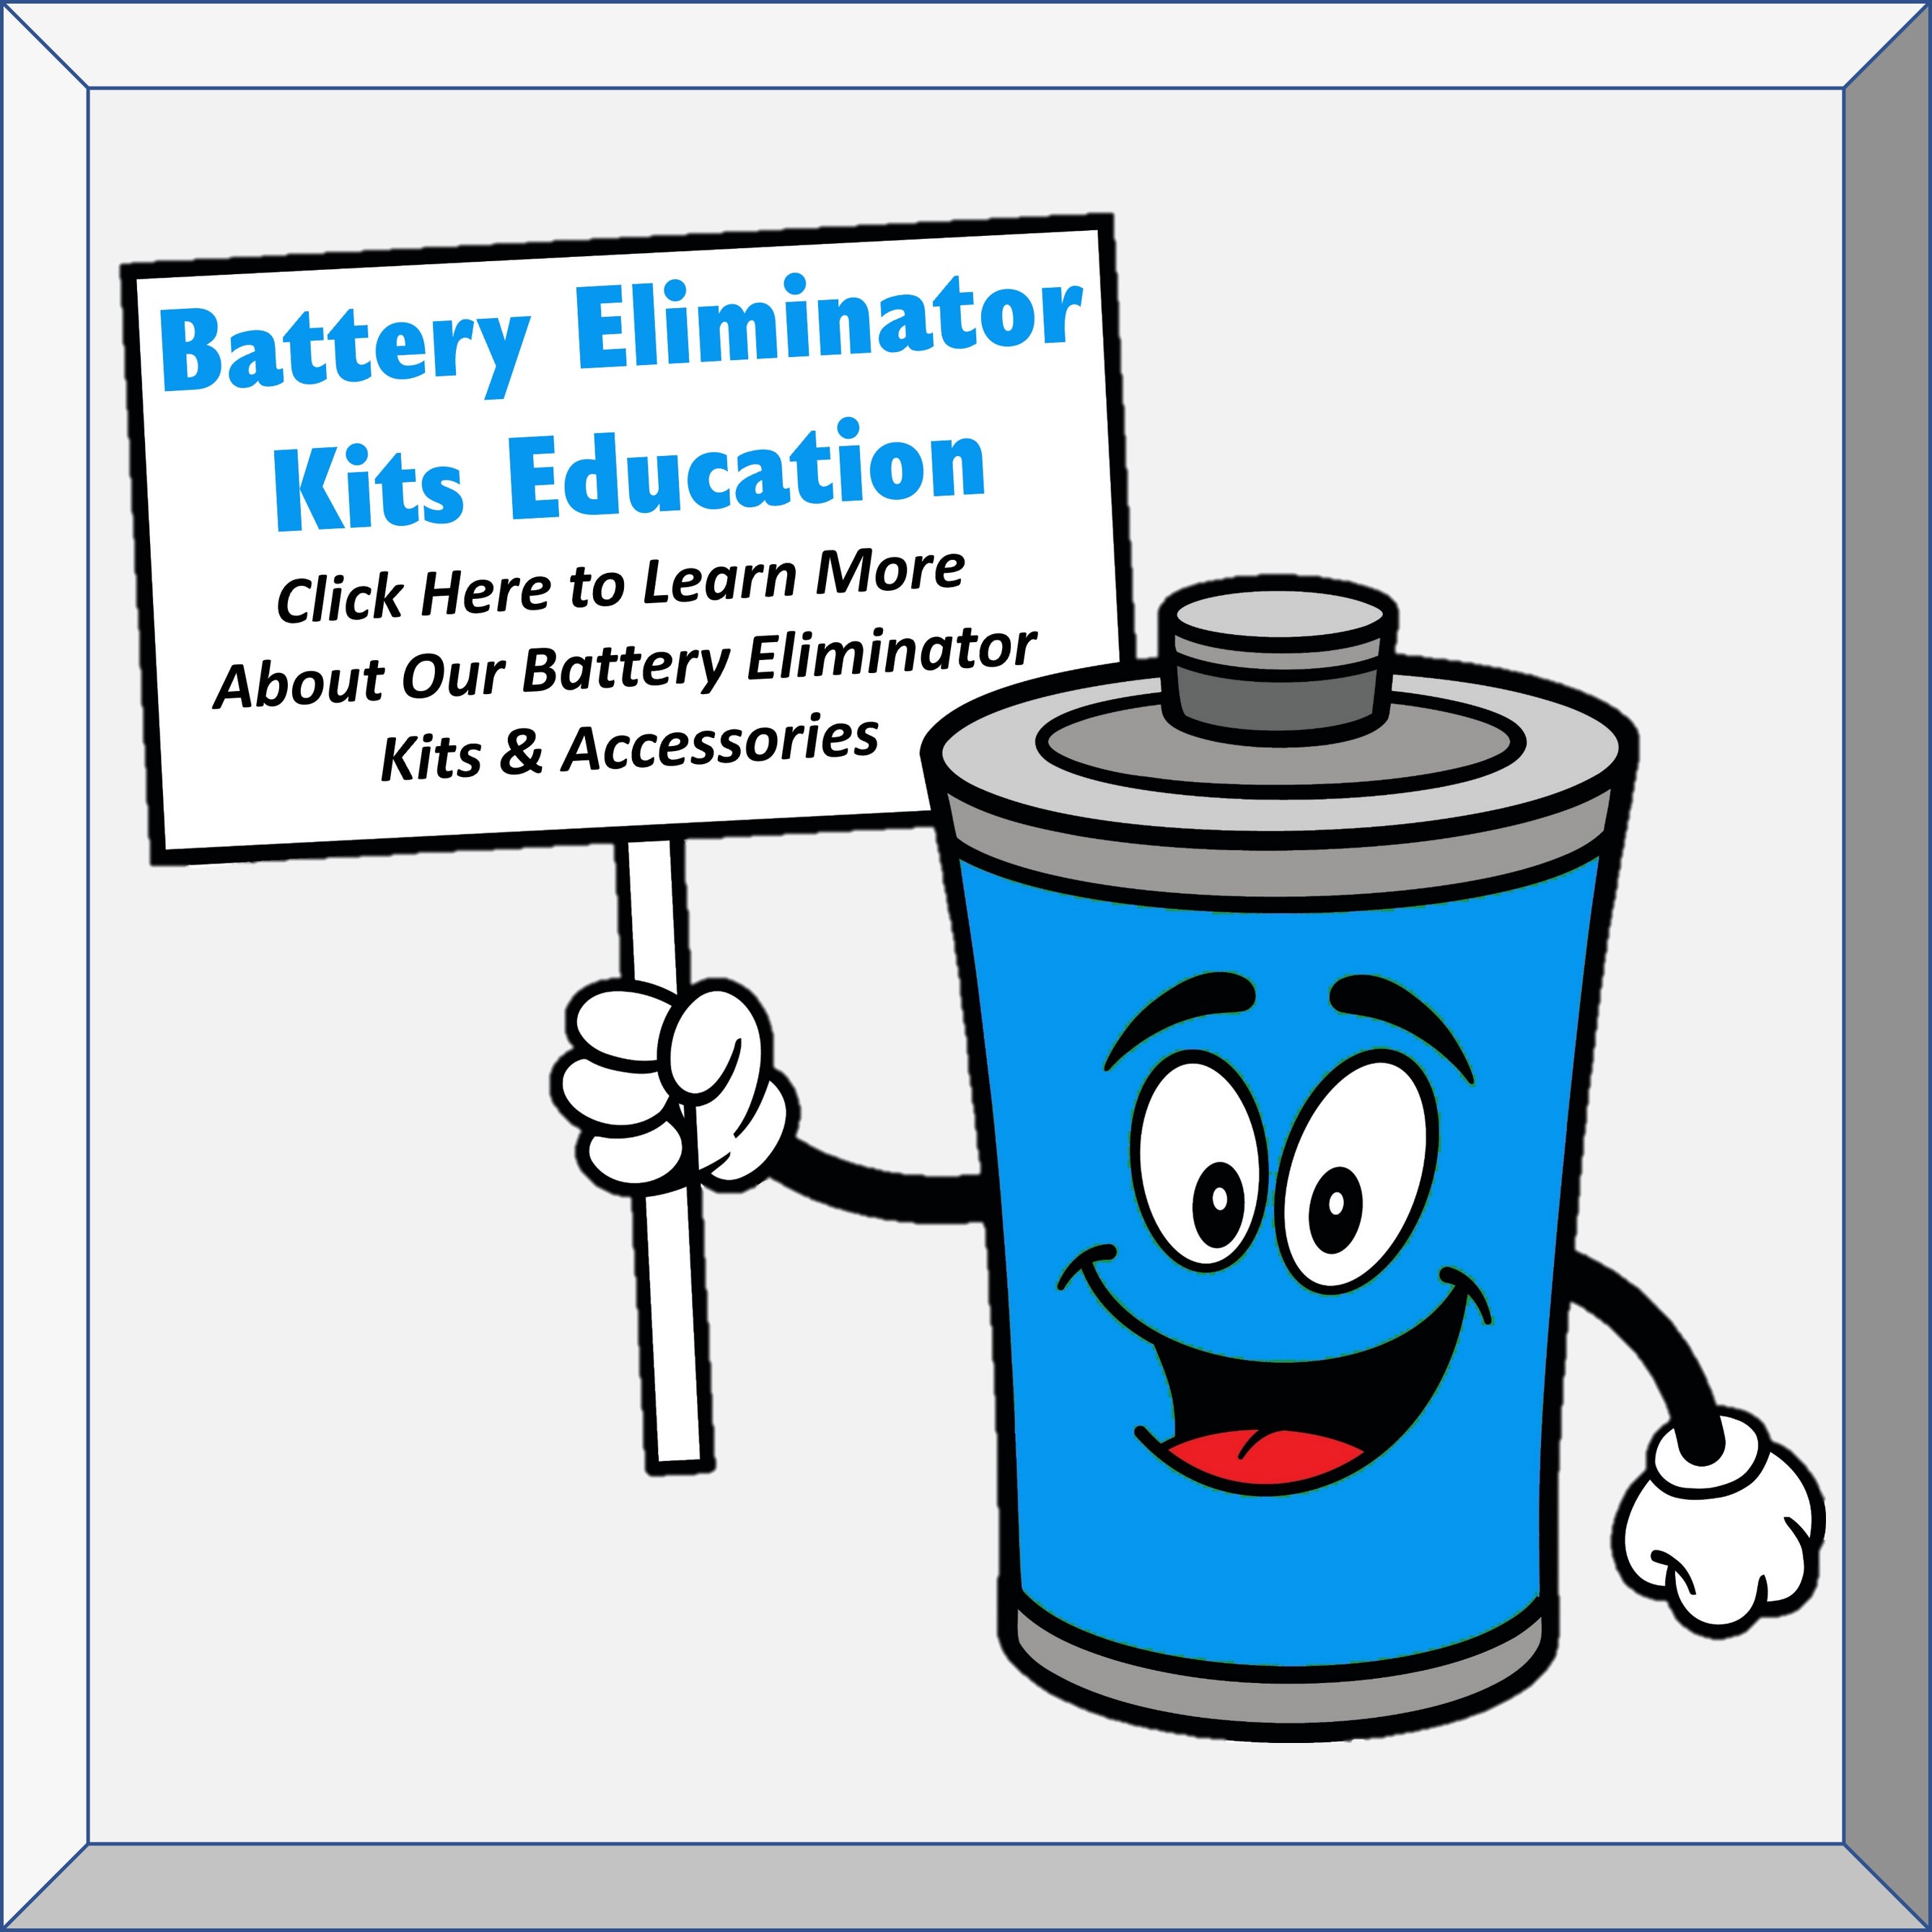 Battery Eliminator Kits Education